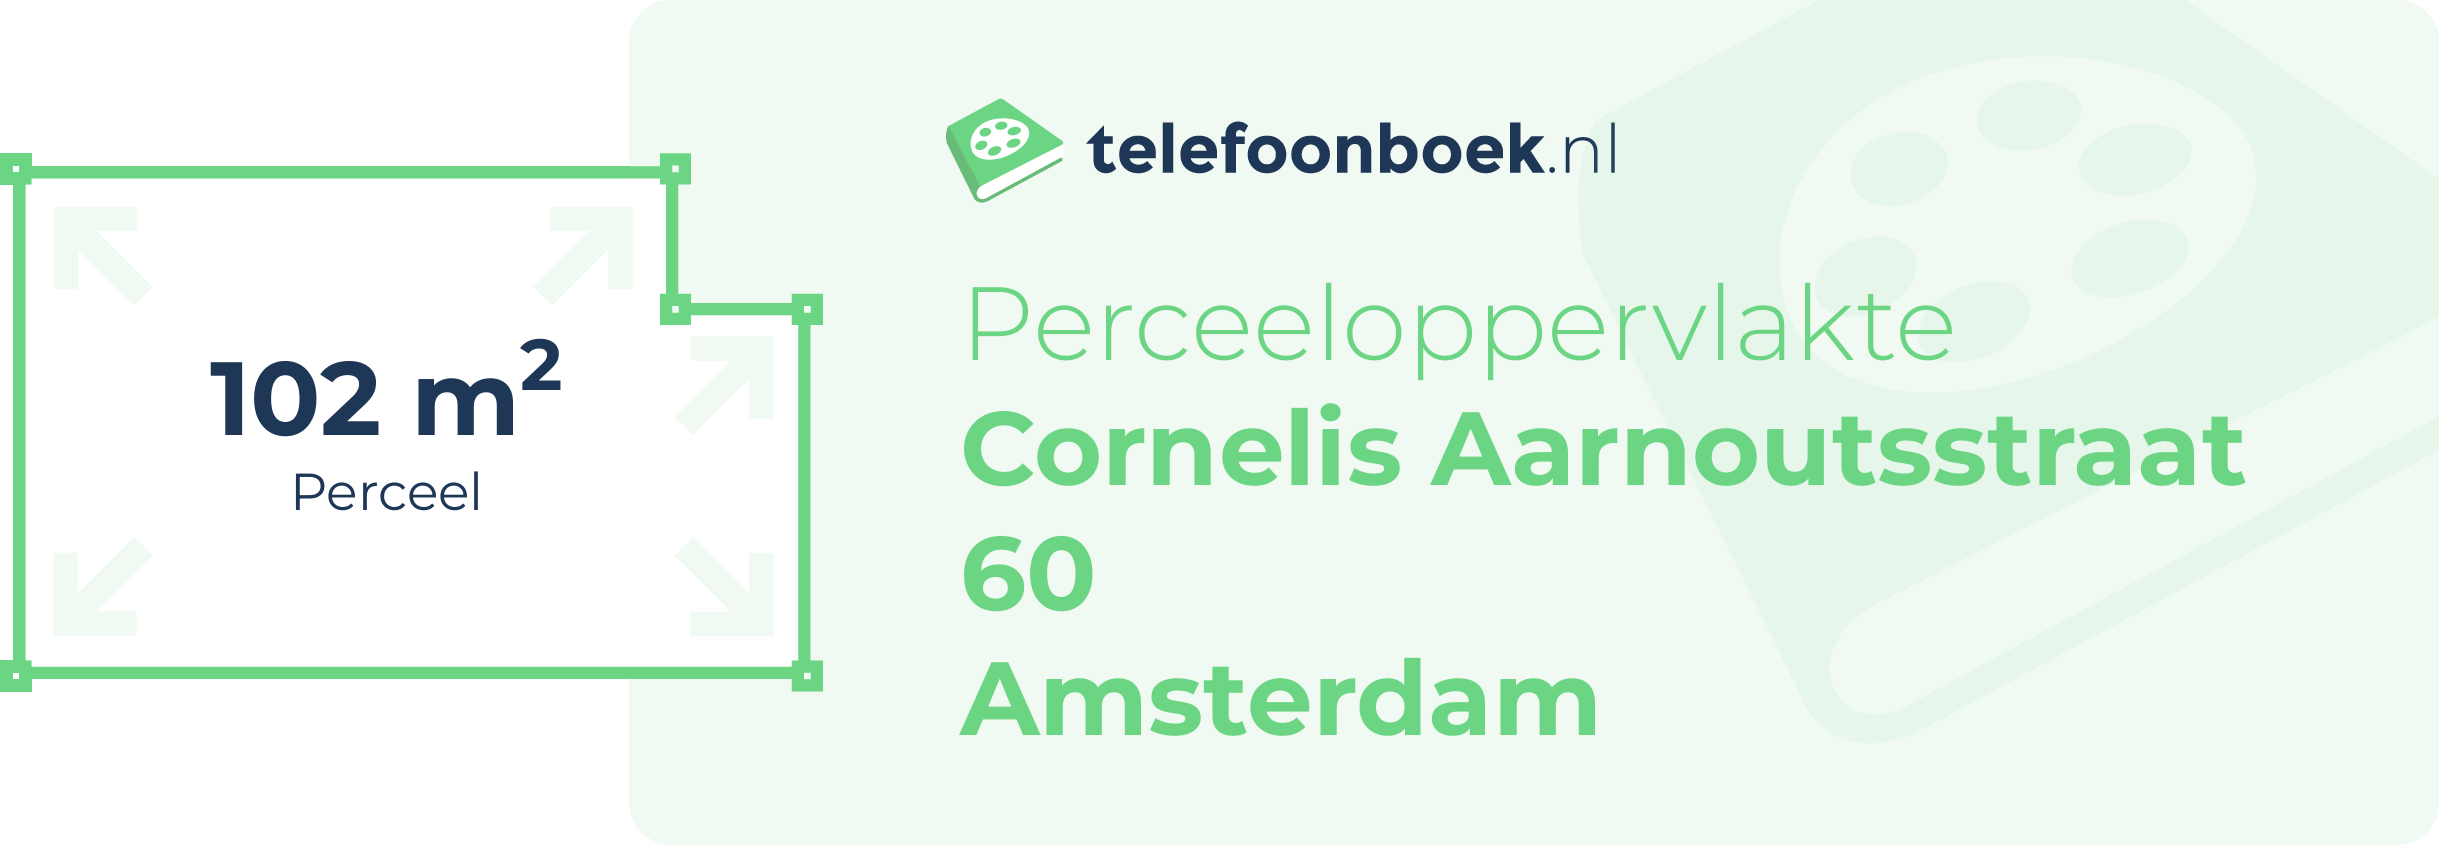 Perceeloppervlakte Cornelis Aarnoutsstraat 60 Amsterdam